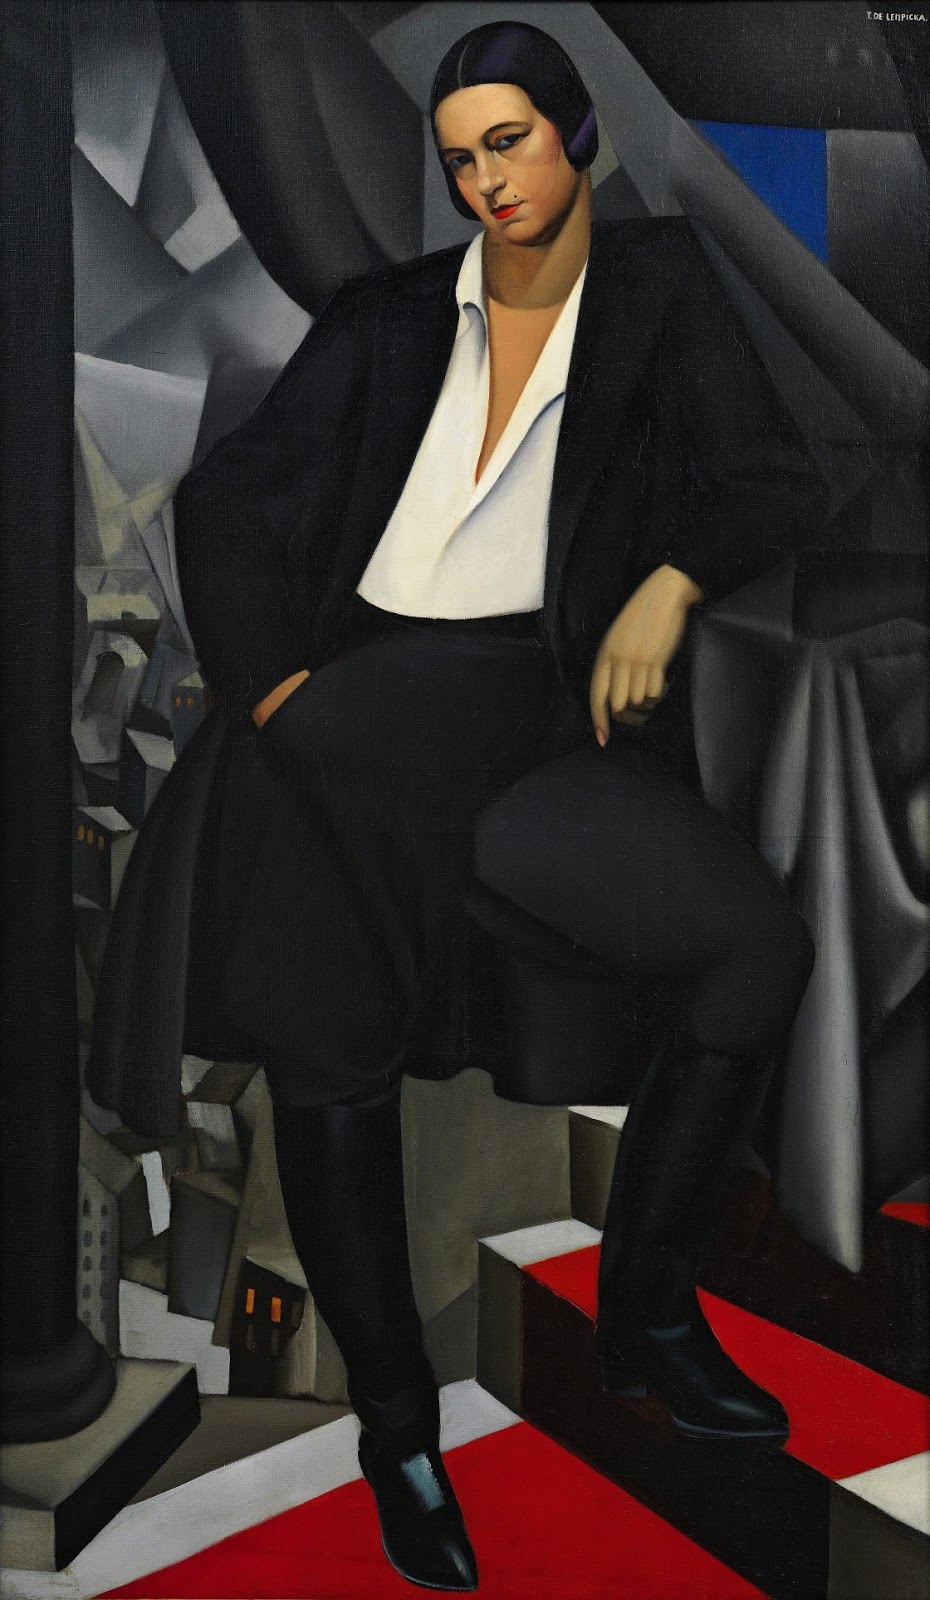 Tamara+de+Lempicka-1898-1980 (101).jpg